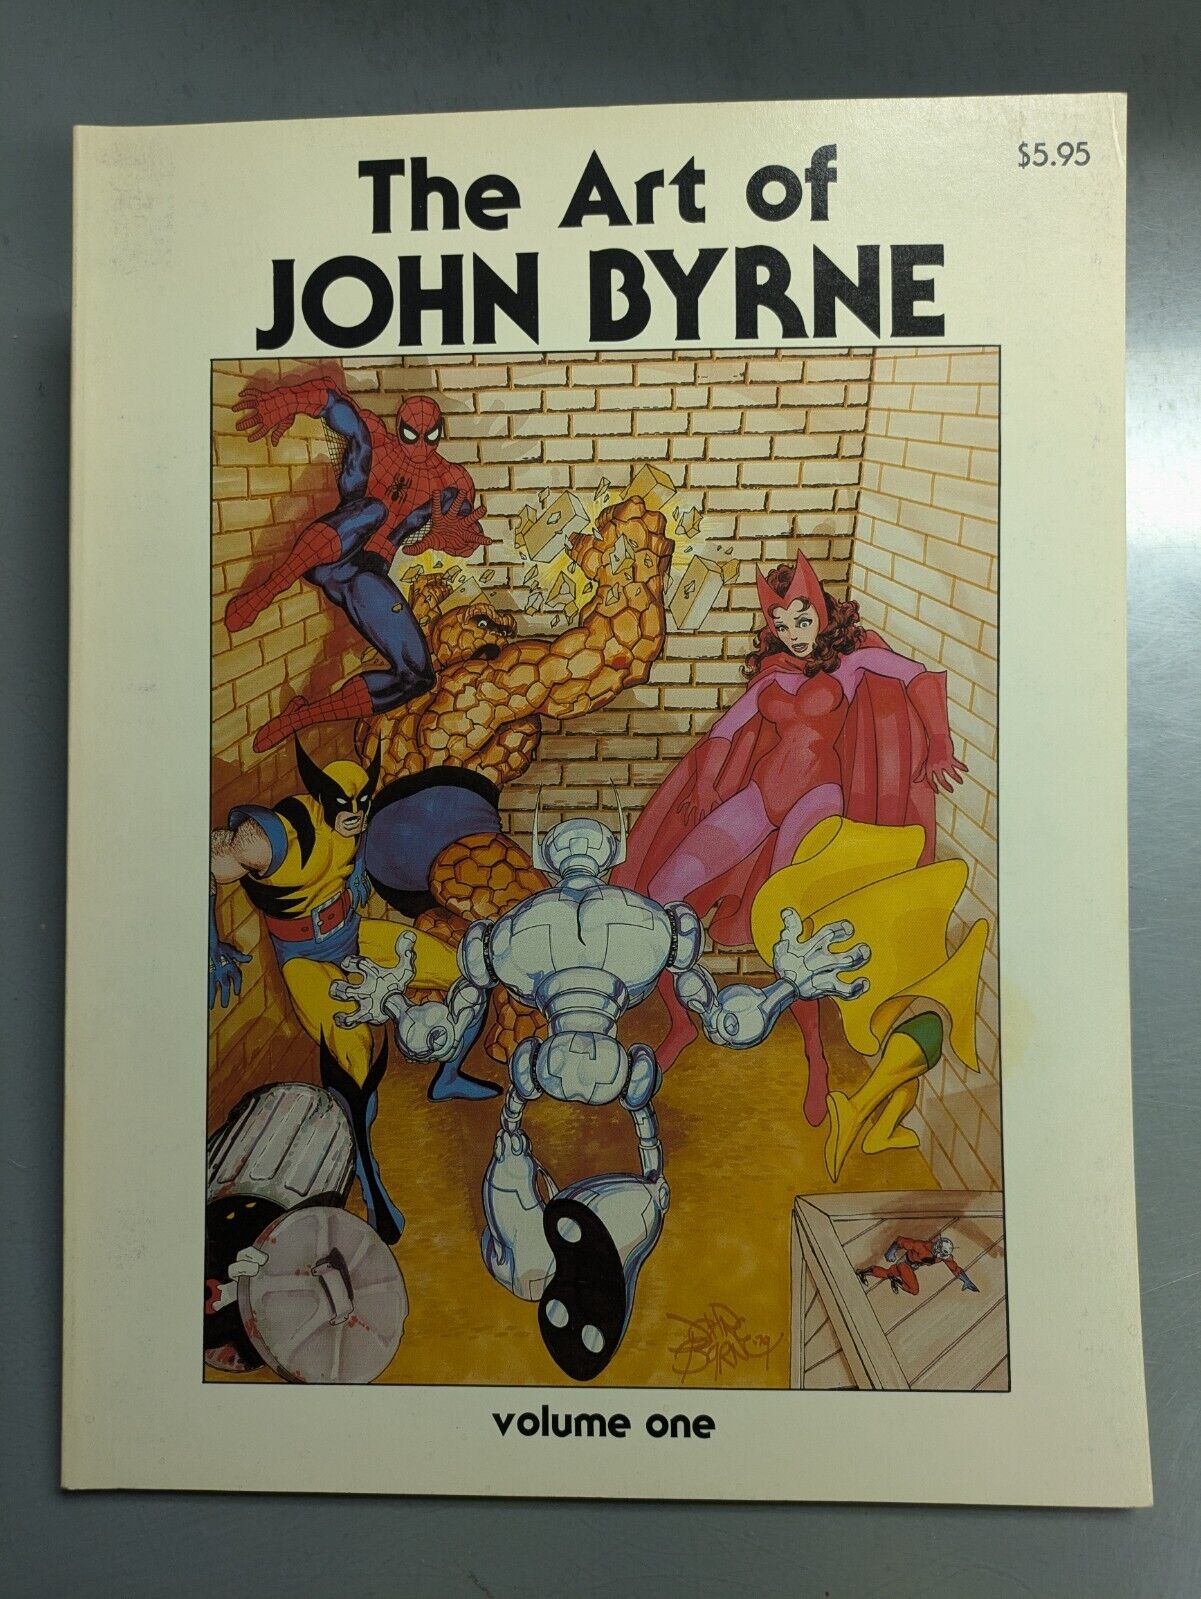 The Art of John Byrne Vol One 1 Trade Paperback Graphic Novel 1980 SQP Marvel DC